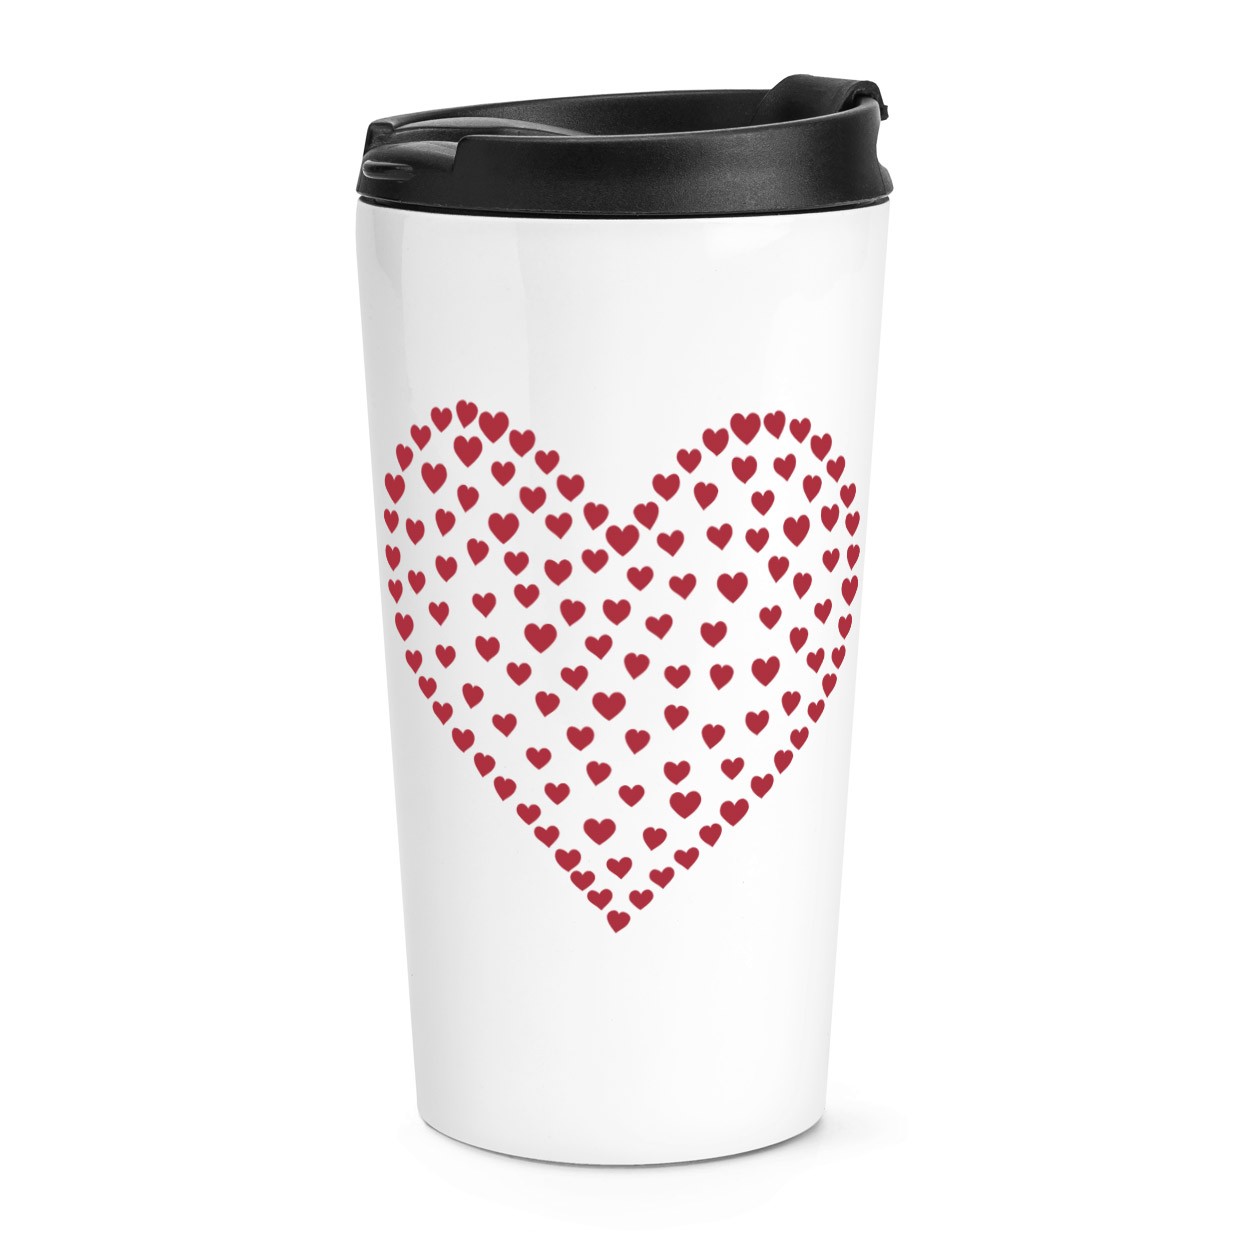 Heart Of Hearts Travel Mug Cup